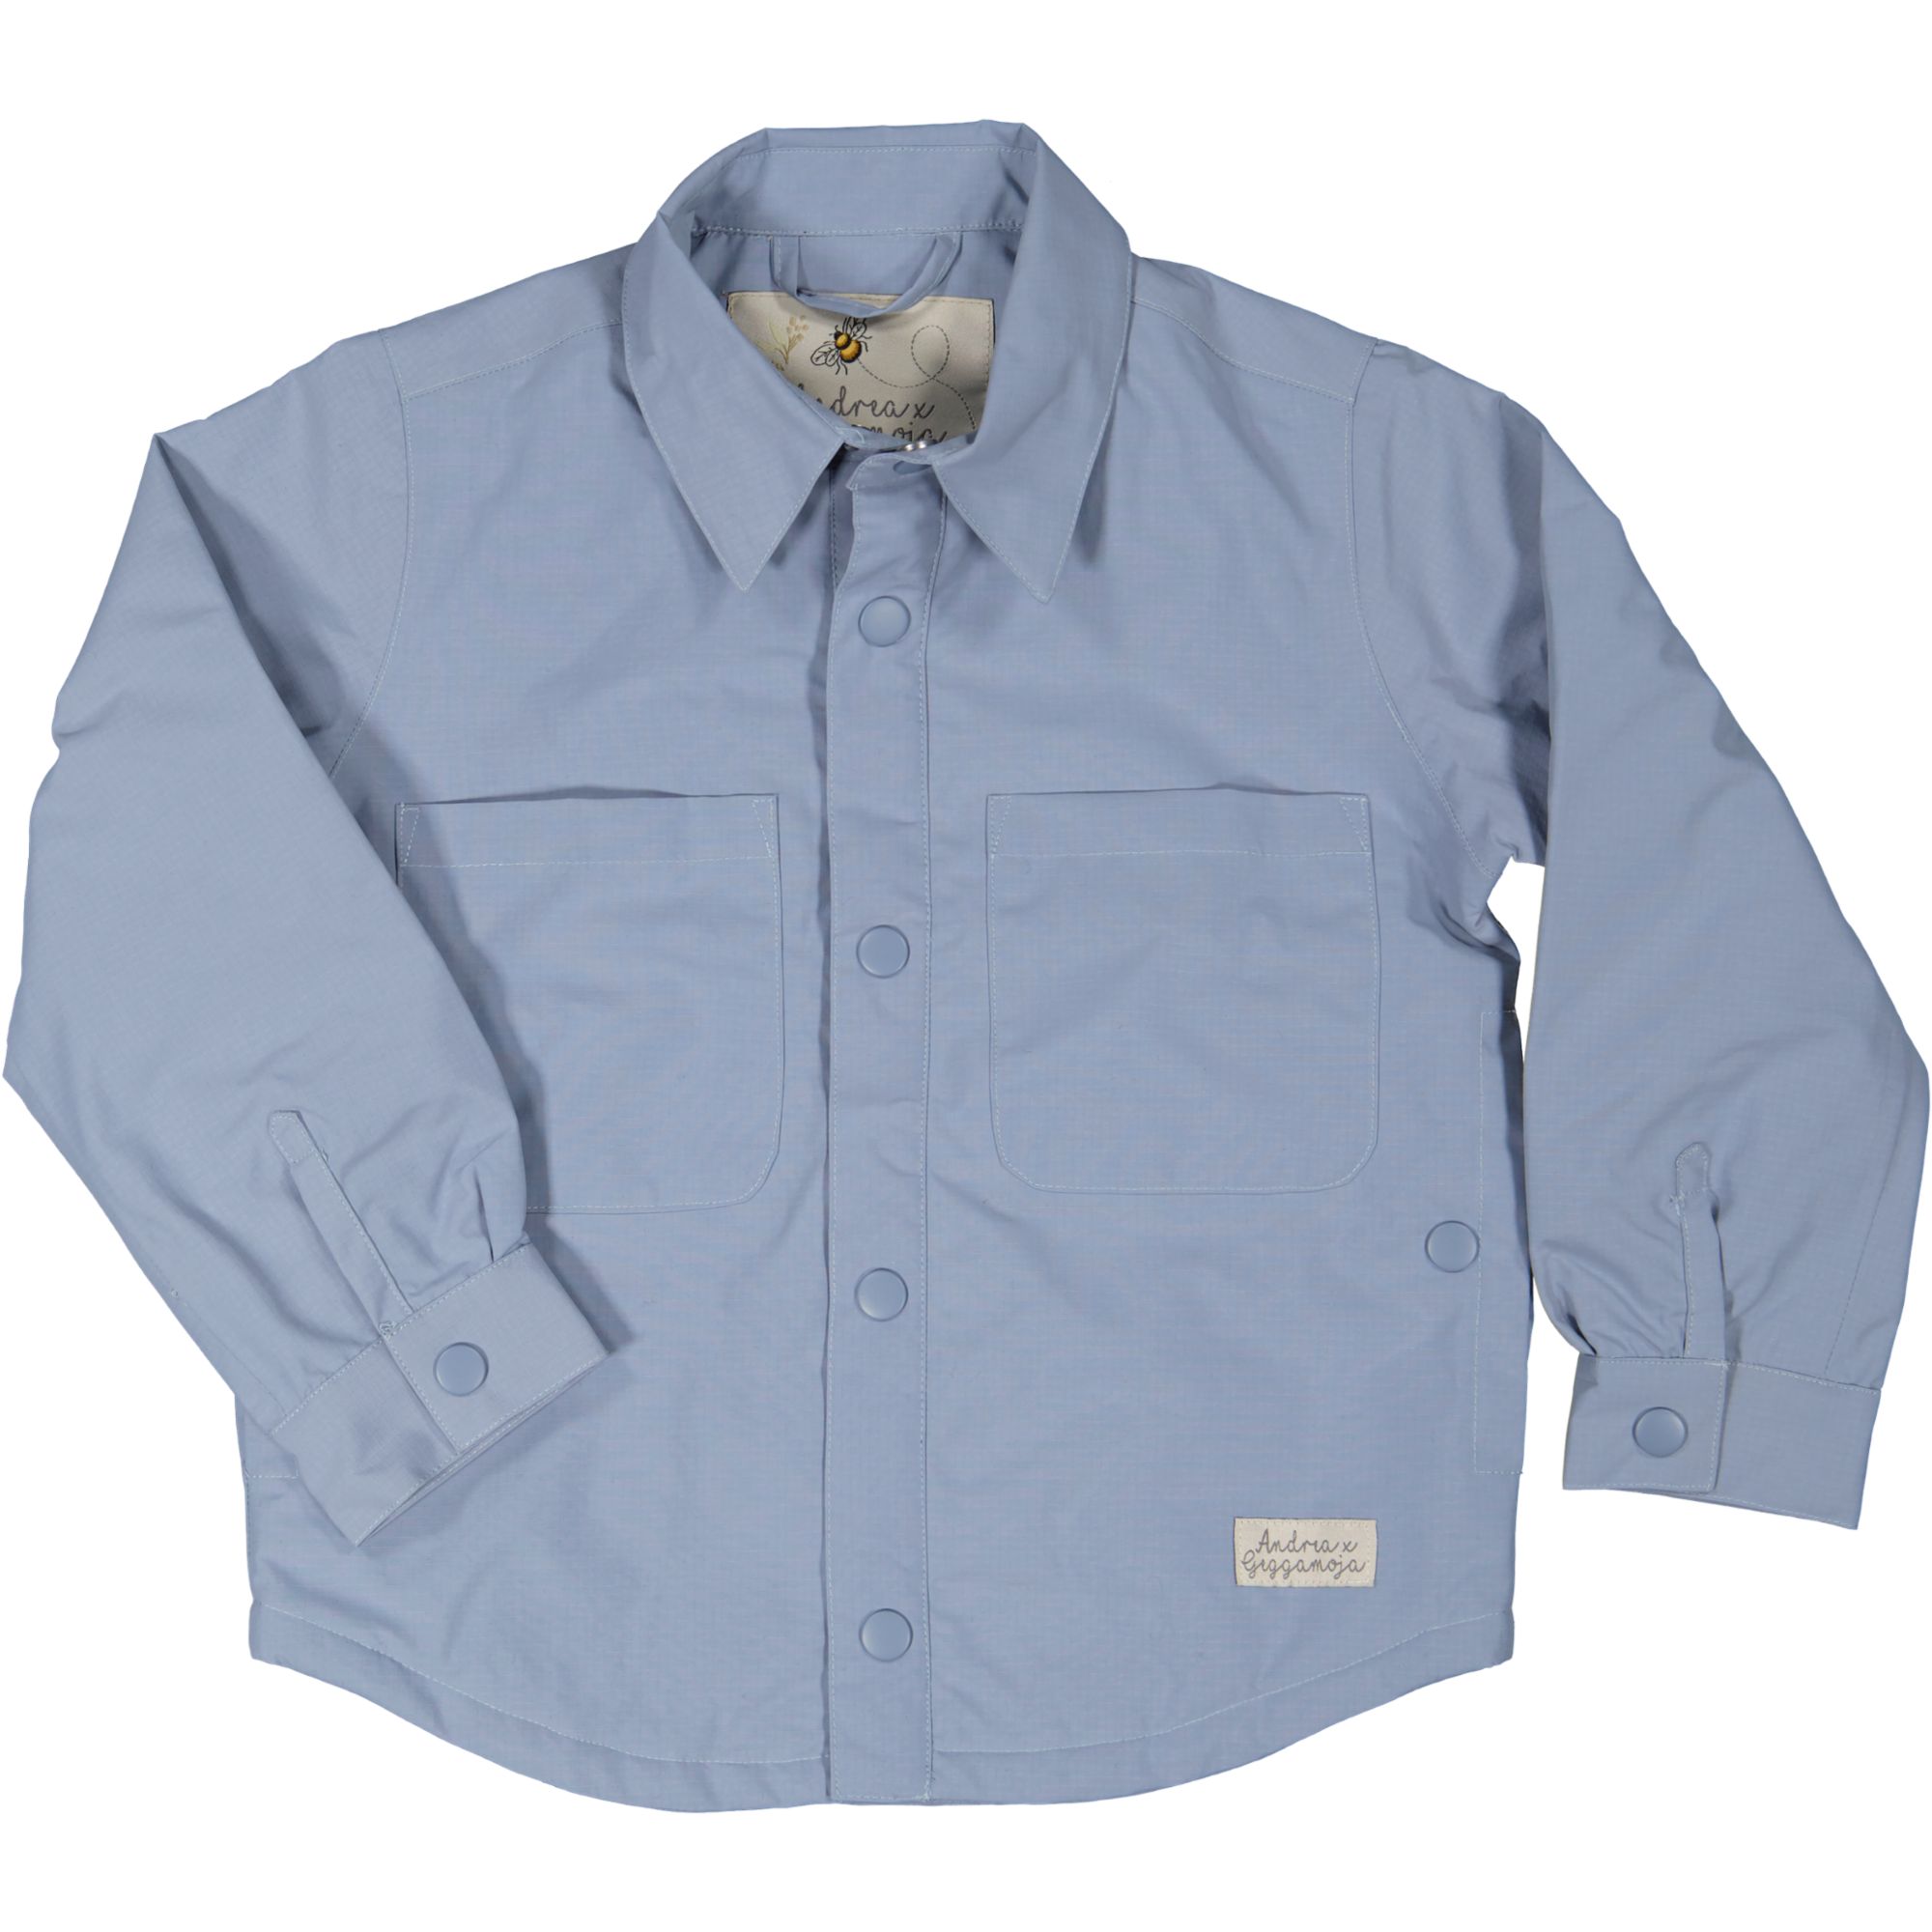 Shell Jacket/Over shirt Dusty Blue